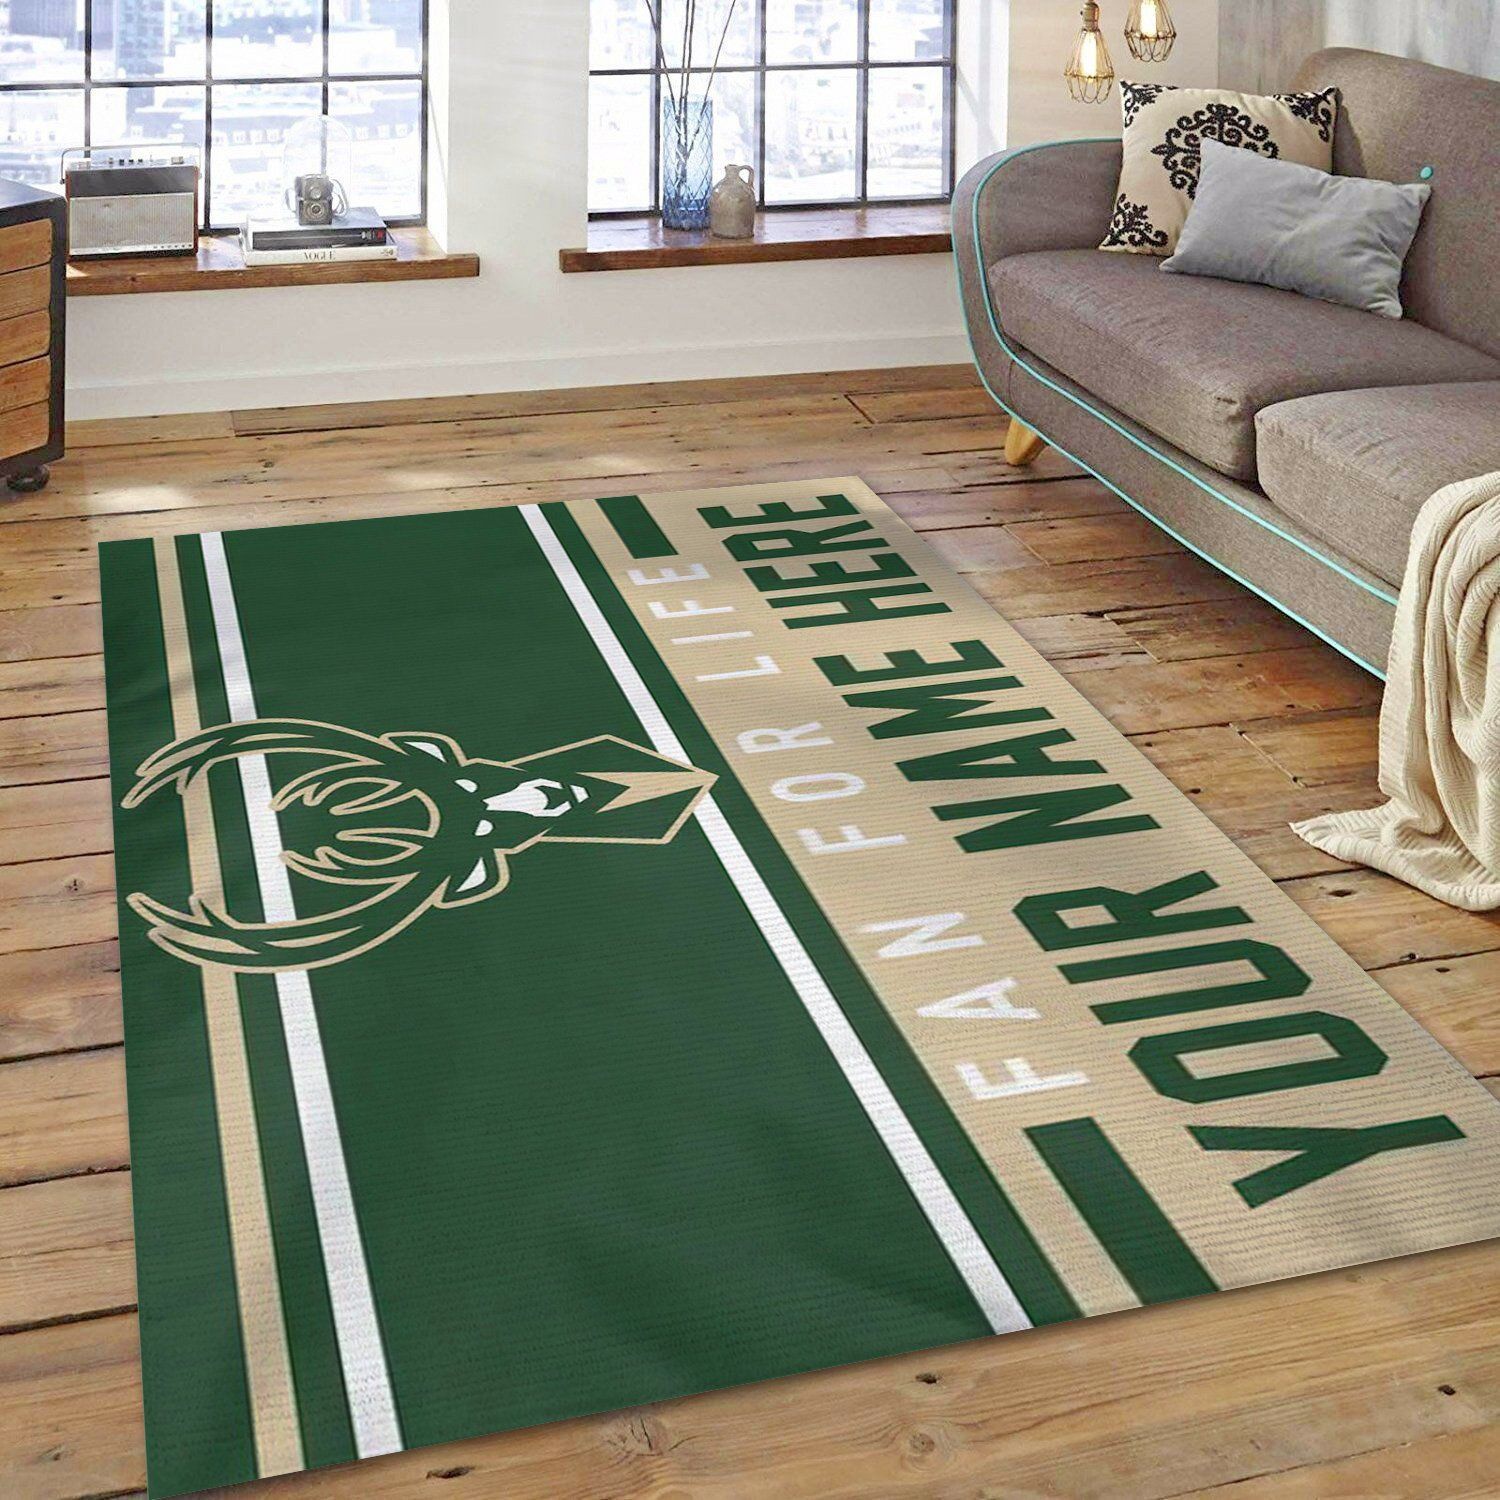 Customizable NBA Milwaukee Bucks Fan Floor home decoration carpet rug